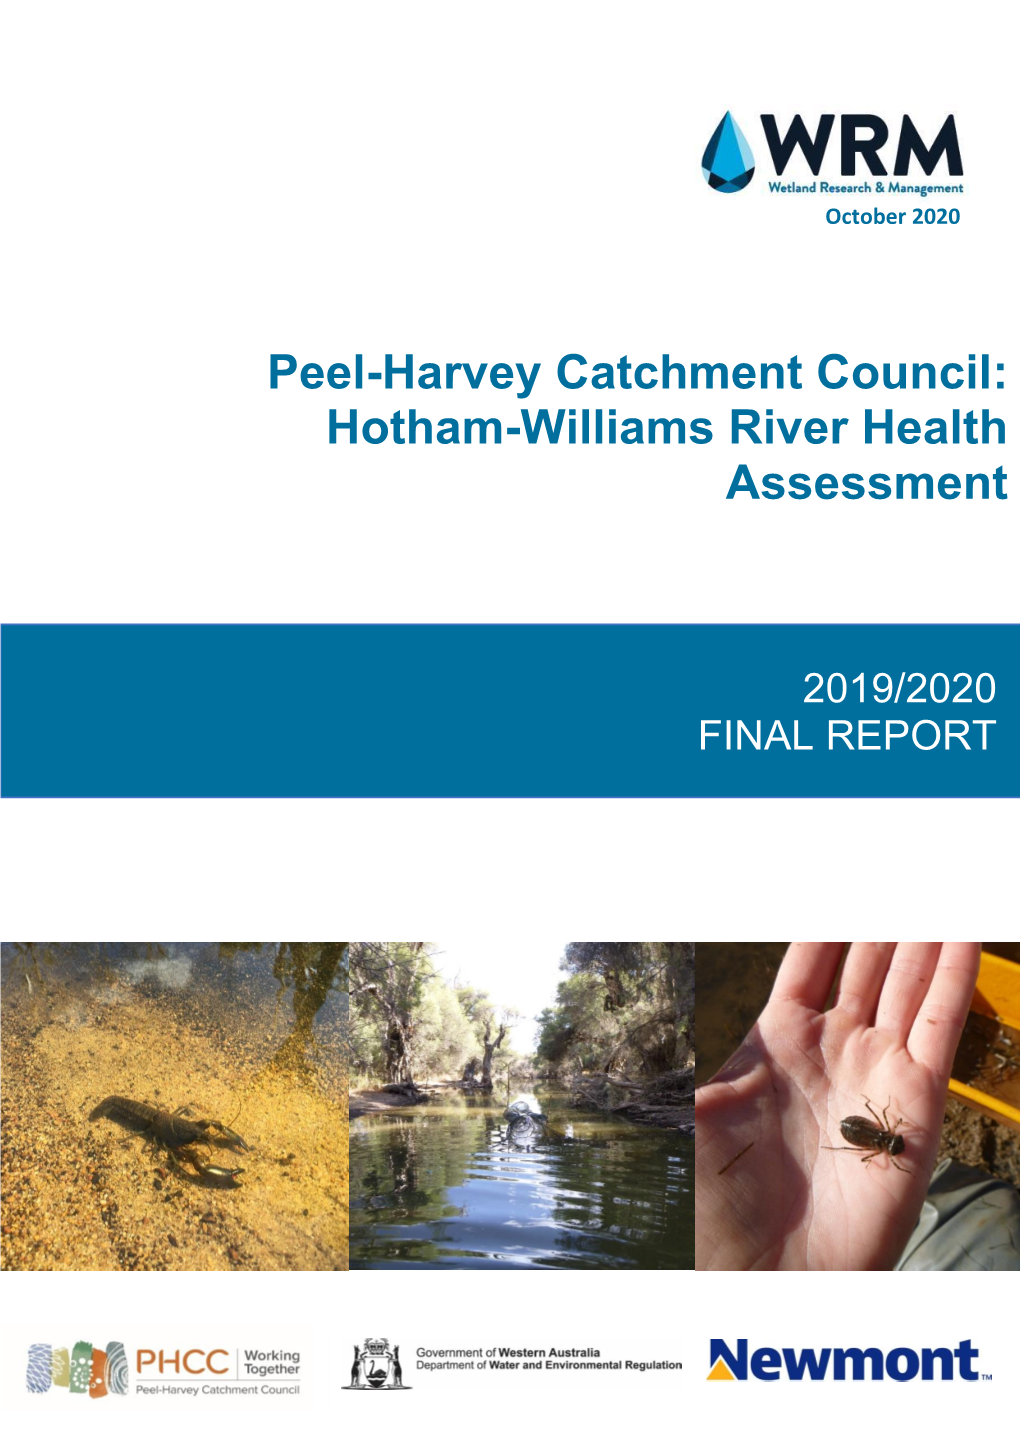 Hotham-Williams River Health Assessment 2019/2020 Sampling